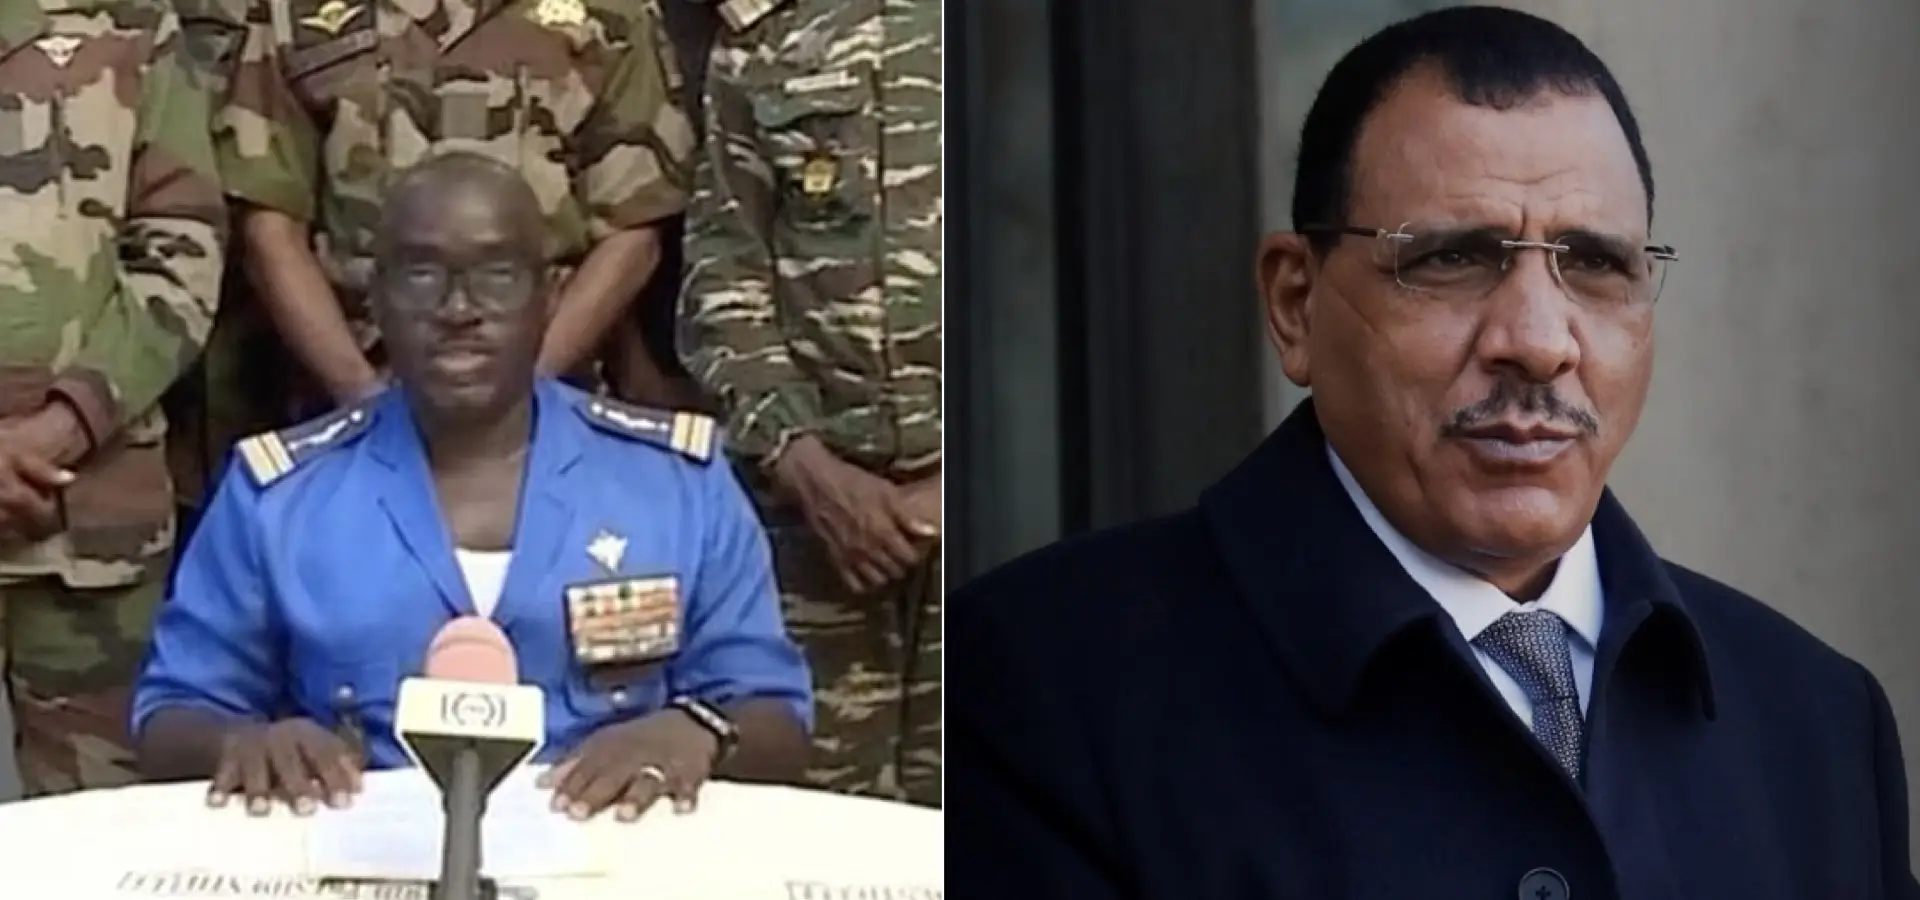 ‎General Tchiani Declares him New Leader of Niger,Sparking International Condemnation